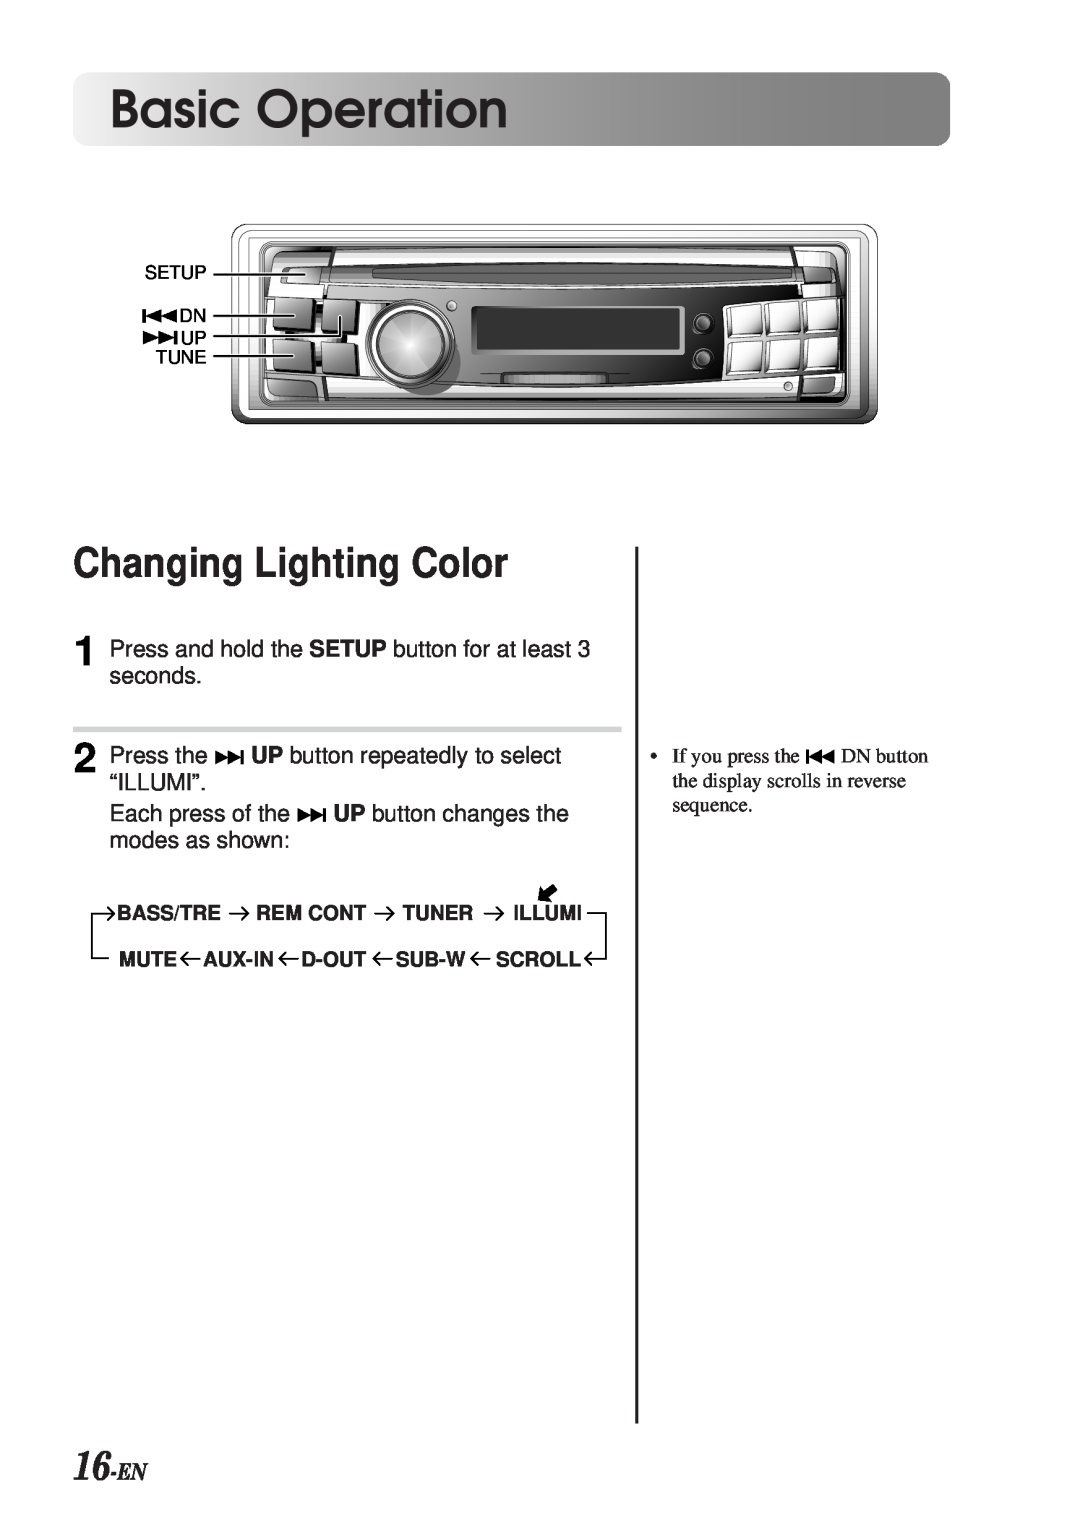 Alpine CDA-7990 manual Changing Lighting Color, 16-EN, Basic Operation 